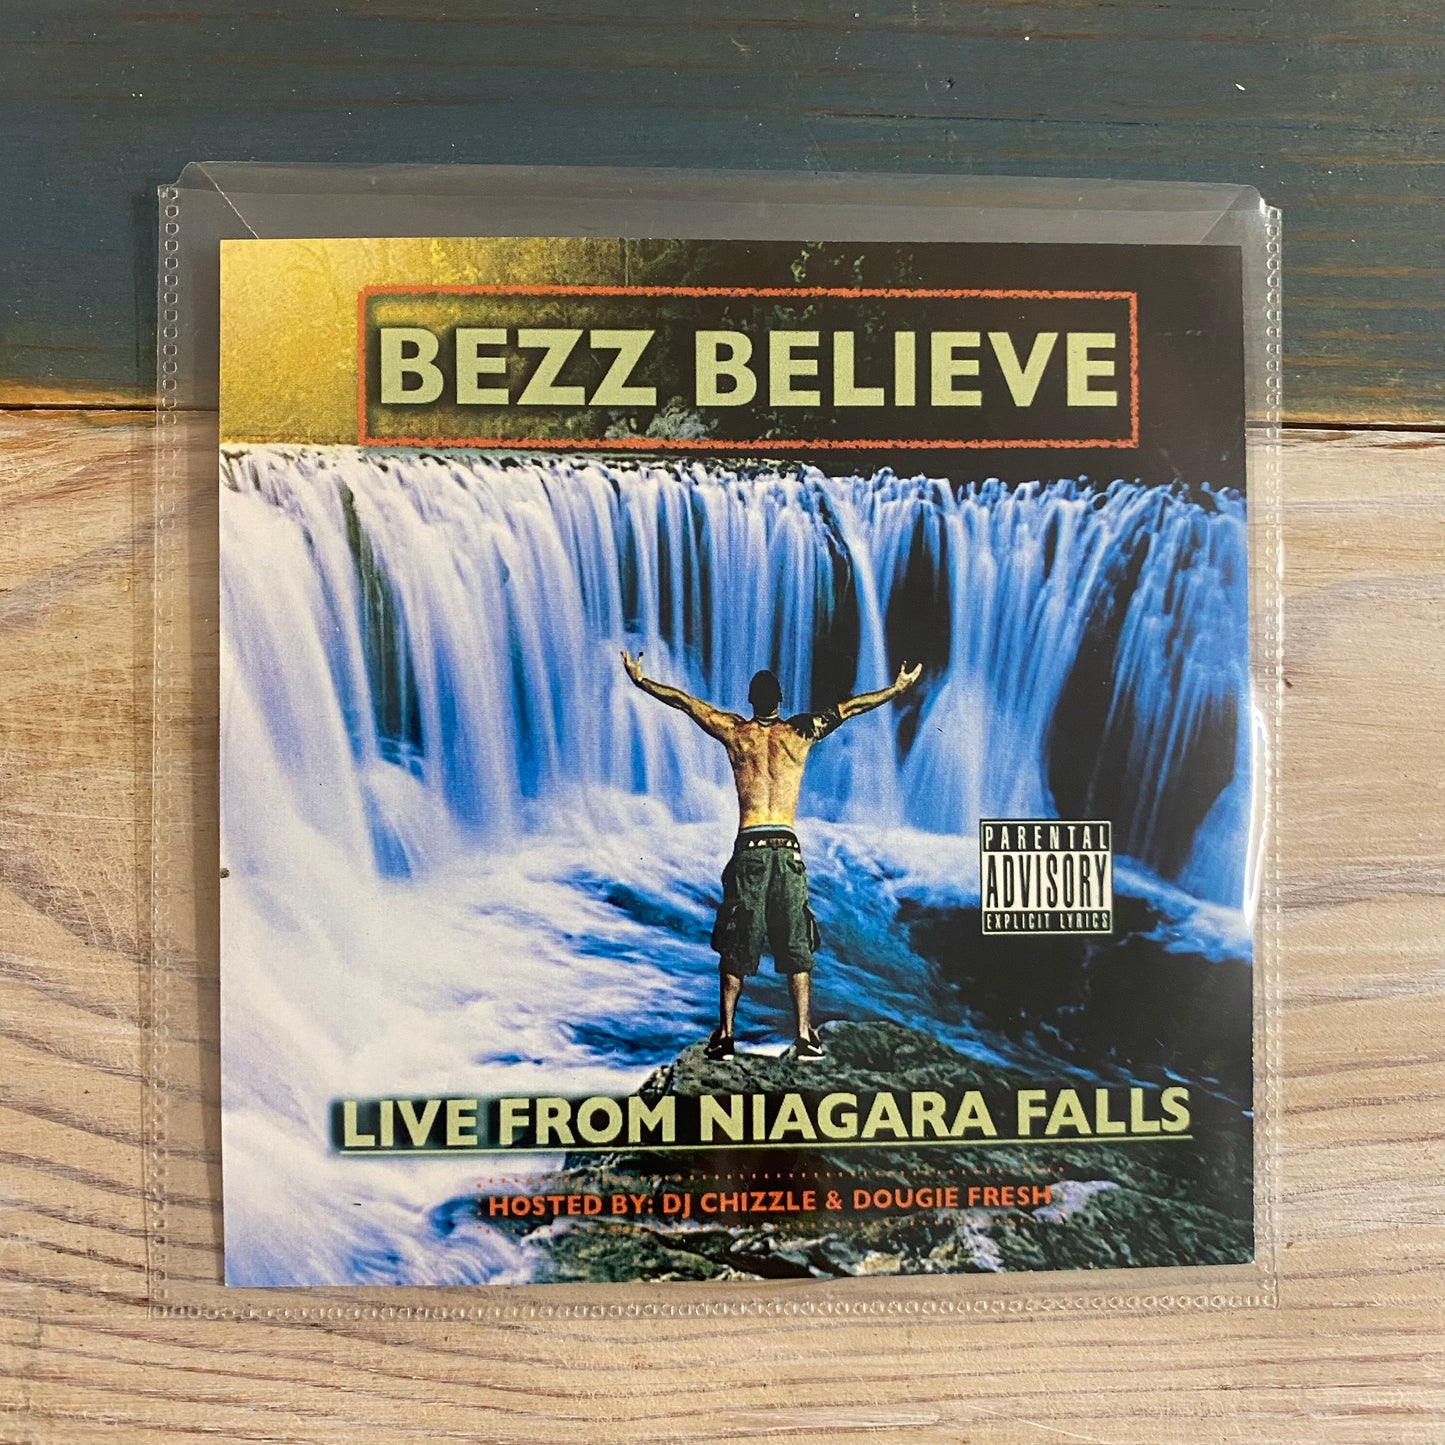 Bezz Believe Live From Niagara Falls Autographed Album